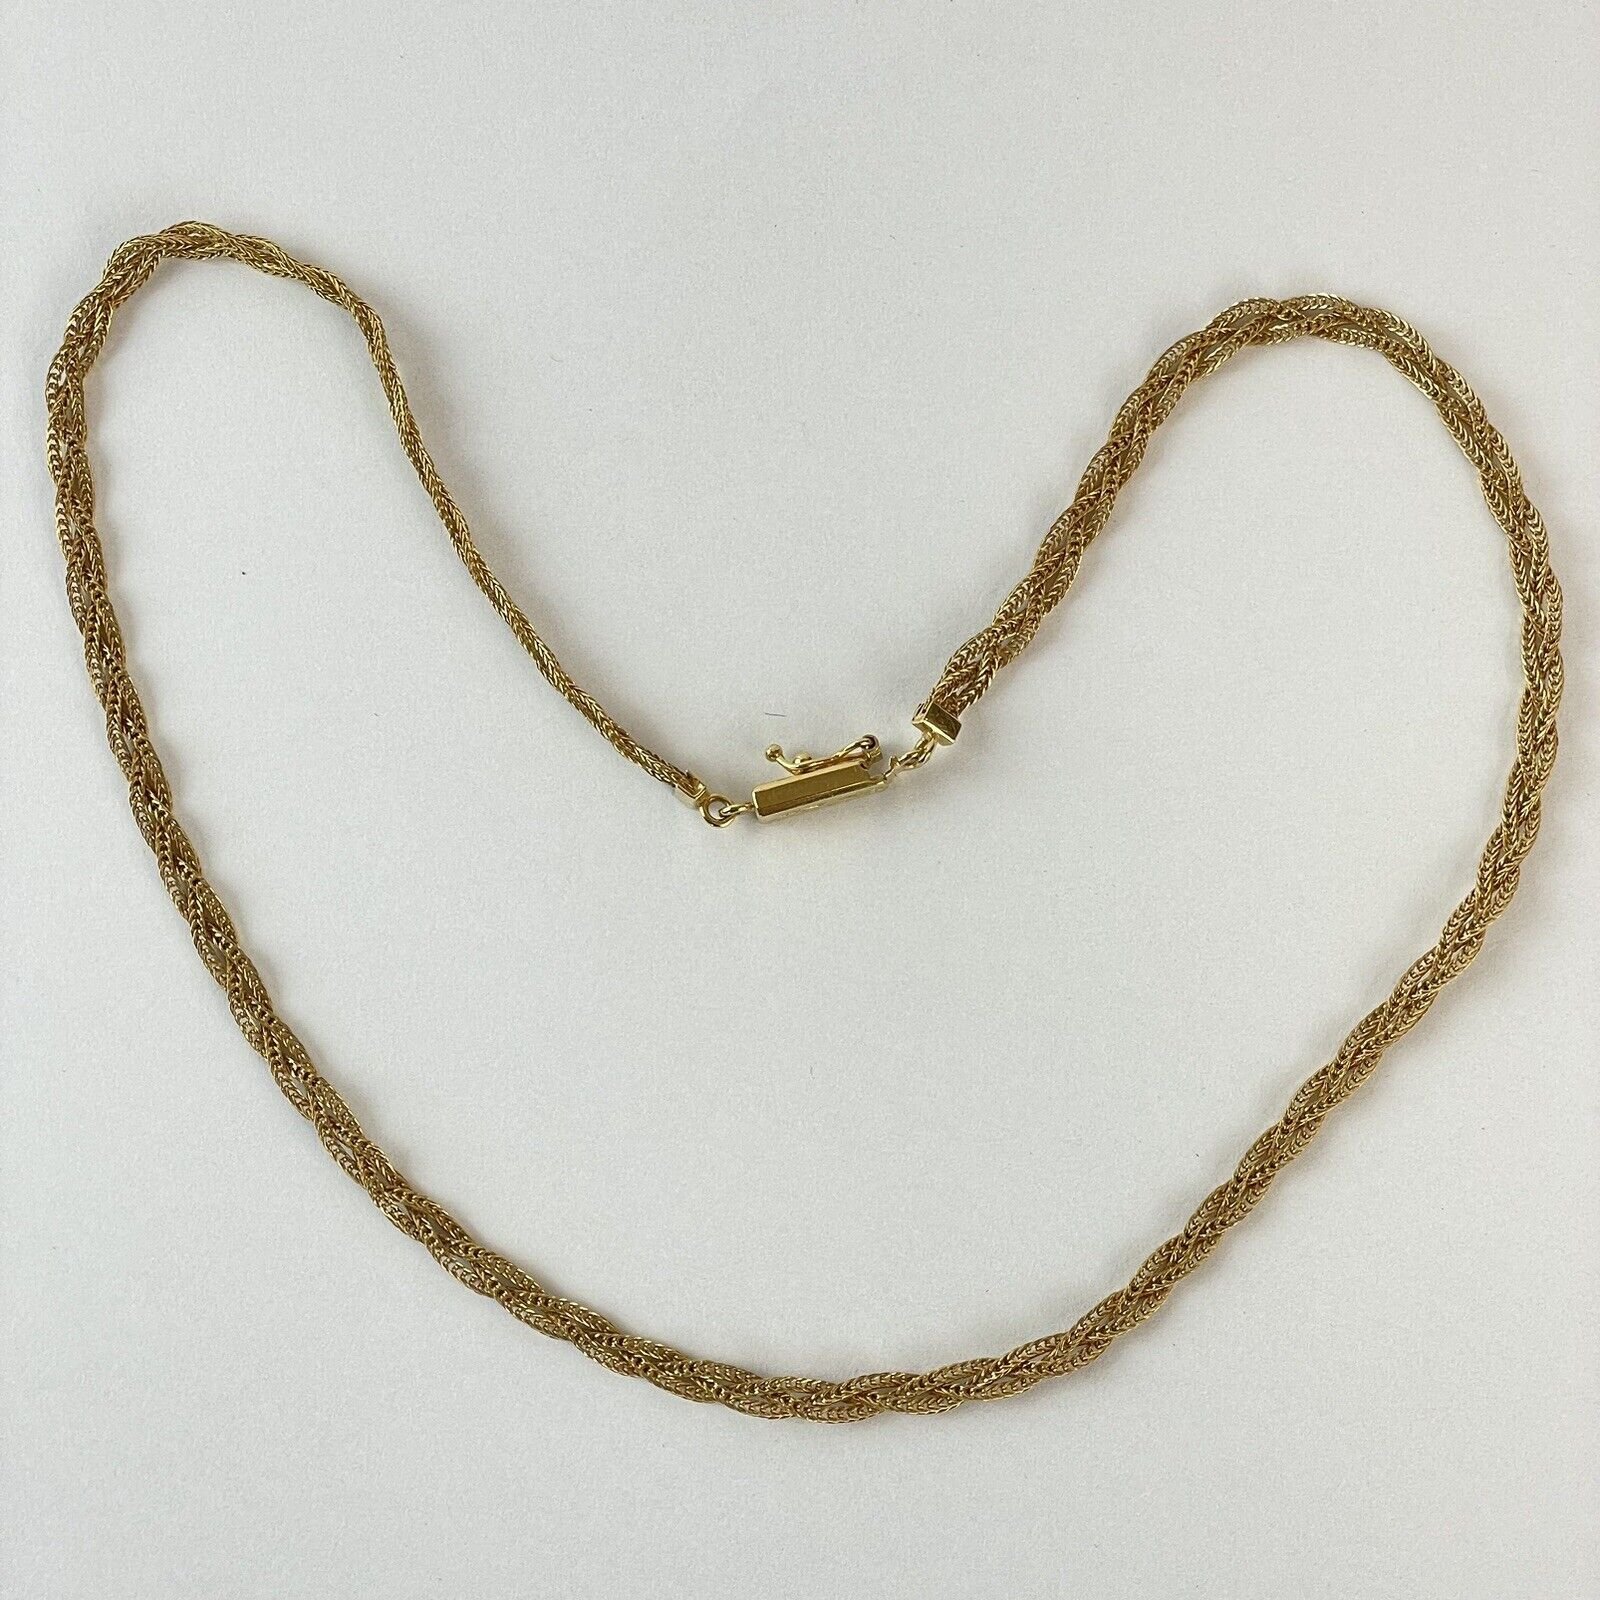 hoplo holzenplotz 2.0 mm 42 cm 333-8 Carat Gold Necklace Pea Chain Solid  Gold High Quality Gold Chain 3.8 g, Gold : Amazon.de: Fashion